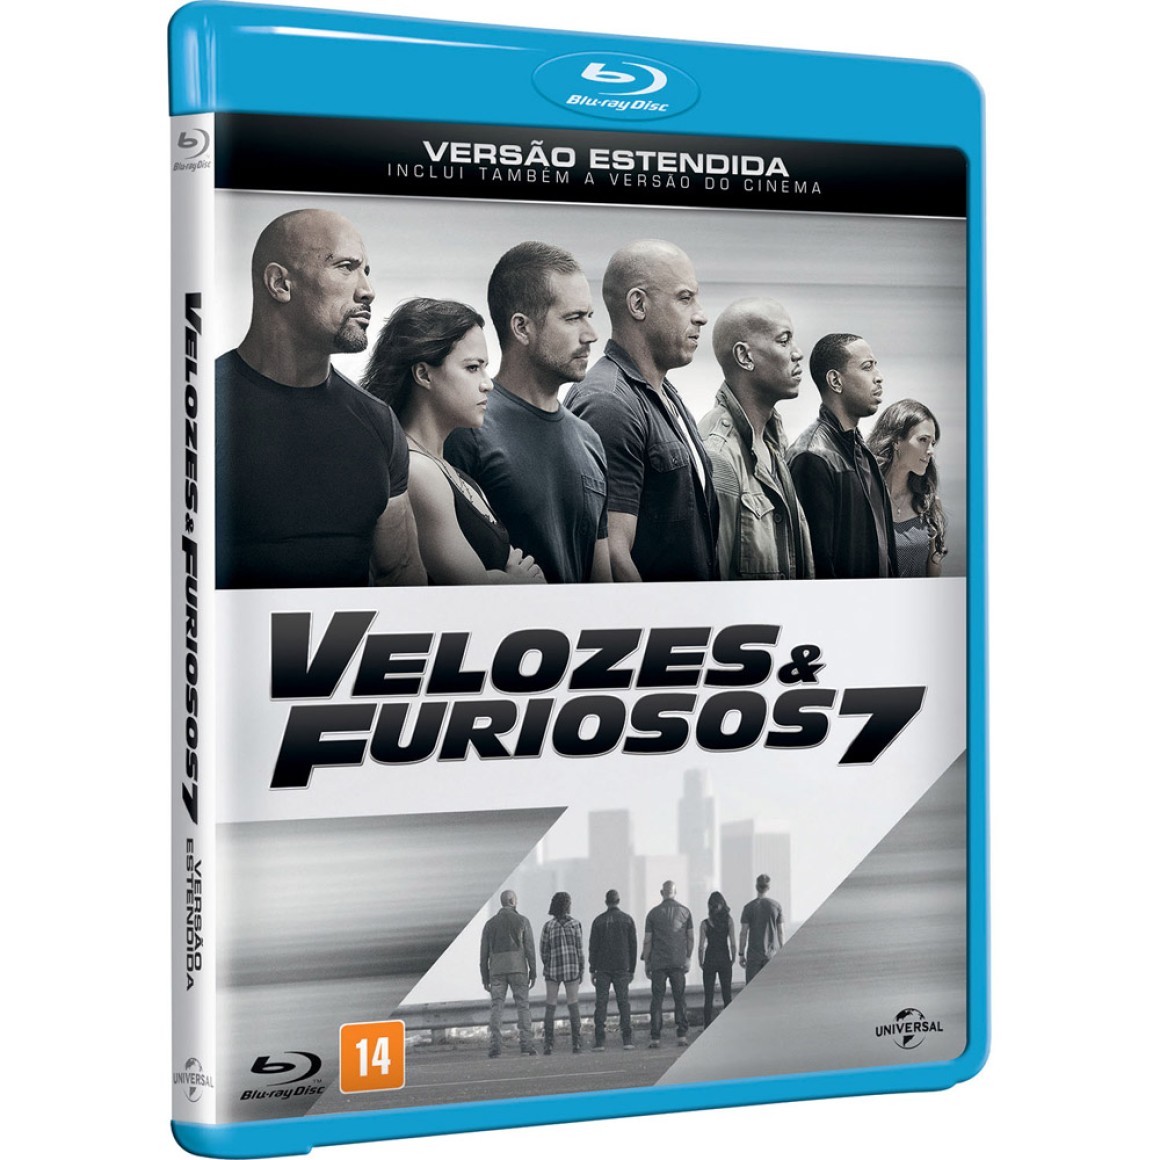 Blu-ray velocidade Furiosa 5 Com Vin Diesel